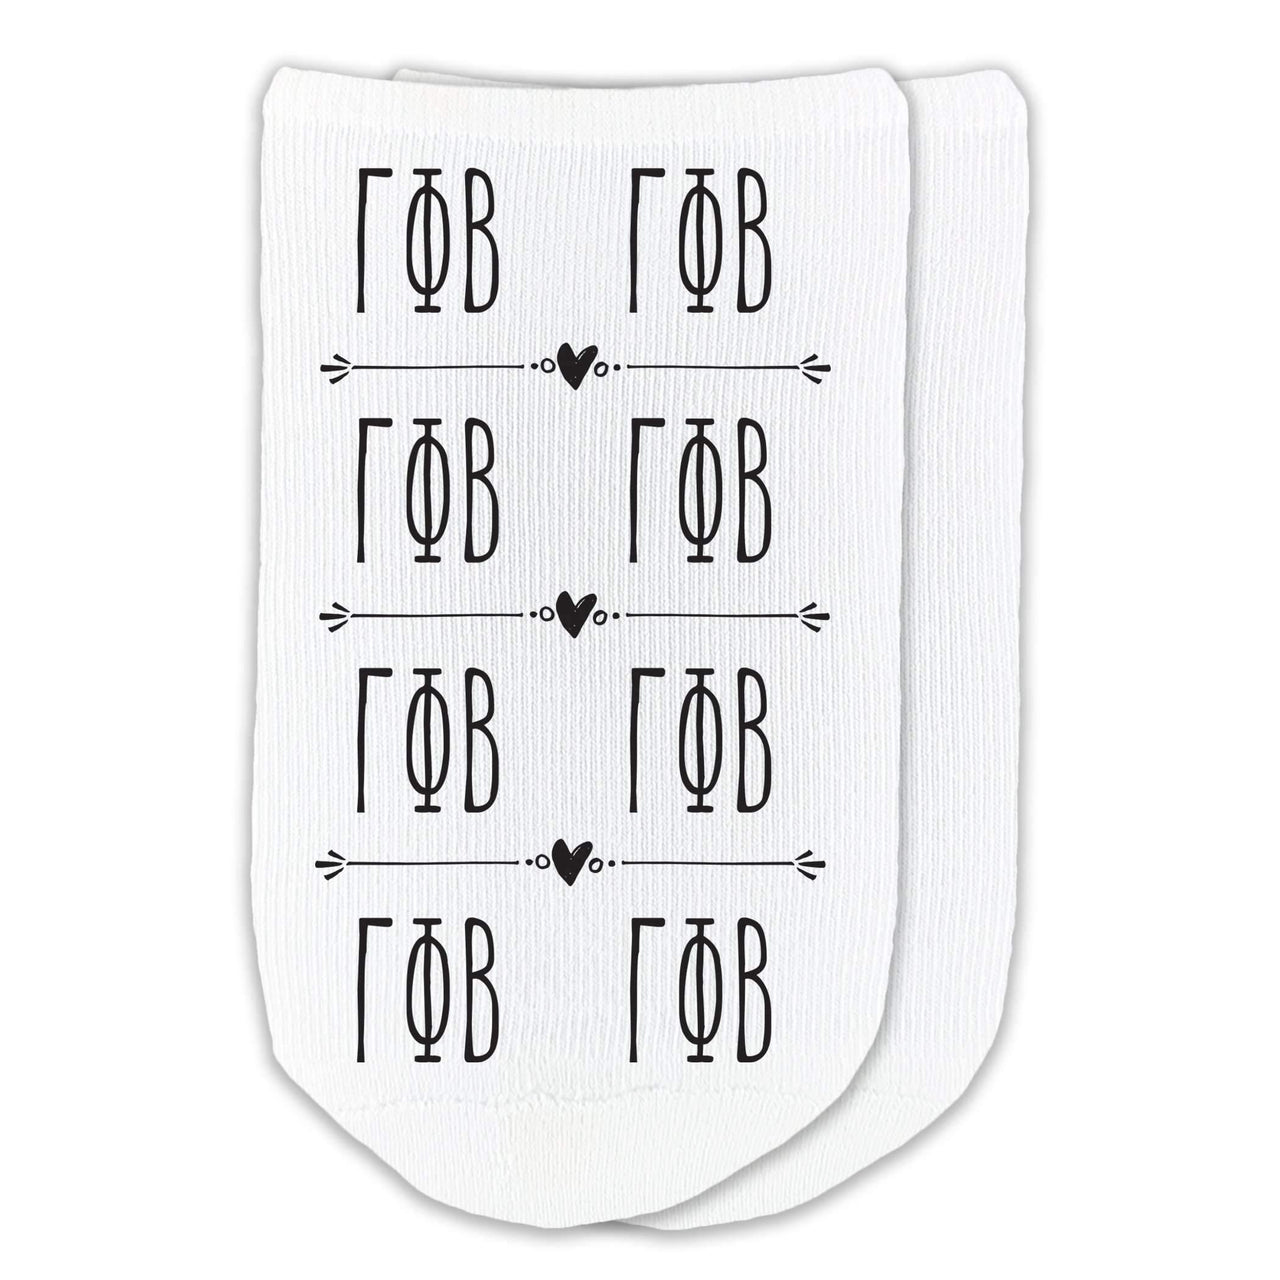 Gamma Phi Beta sorority letters in repeating boho design custom printed on white cotton no show socks